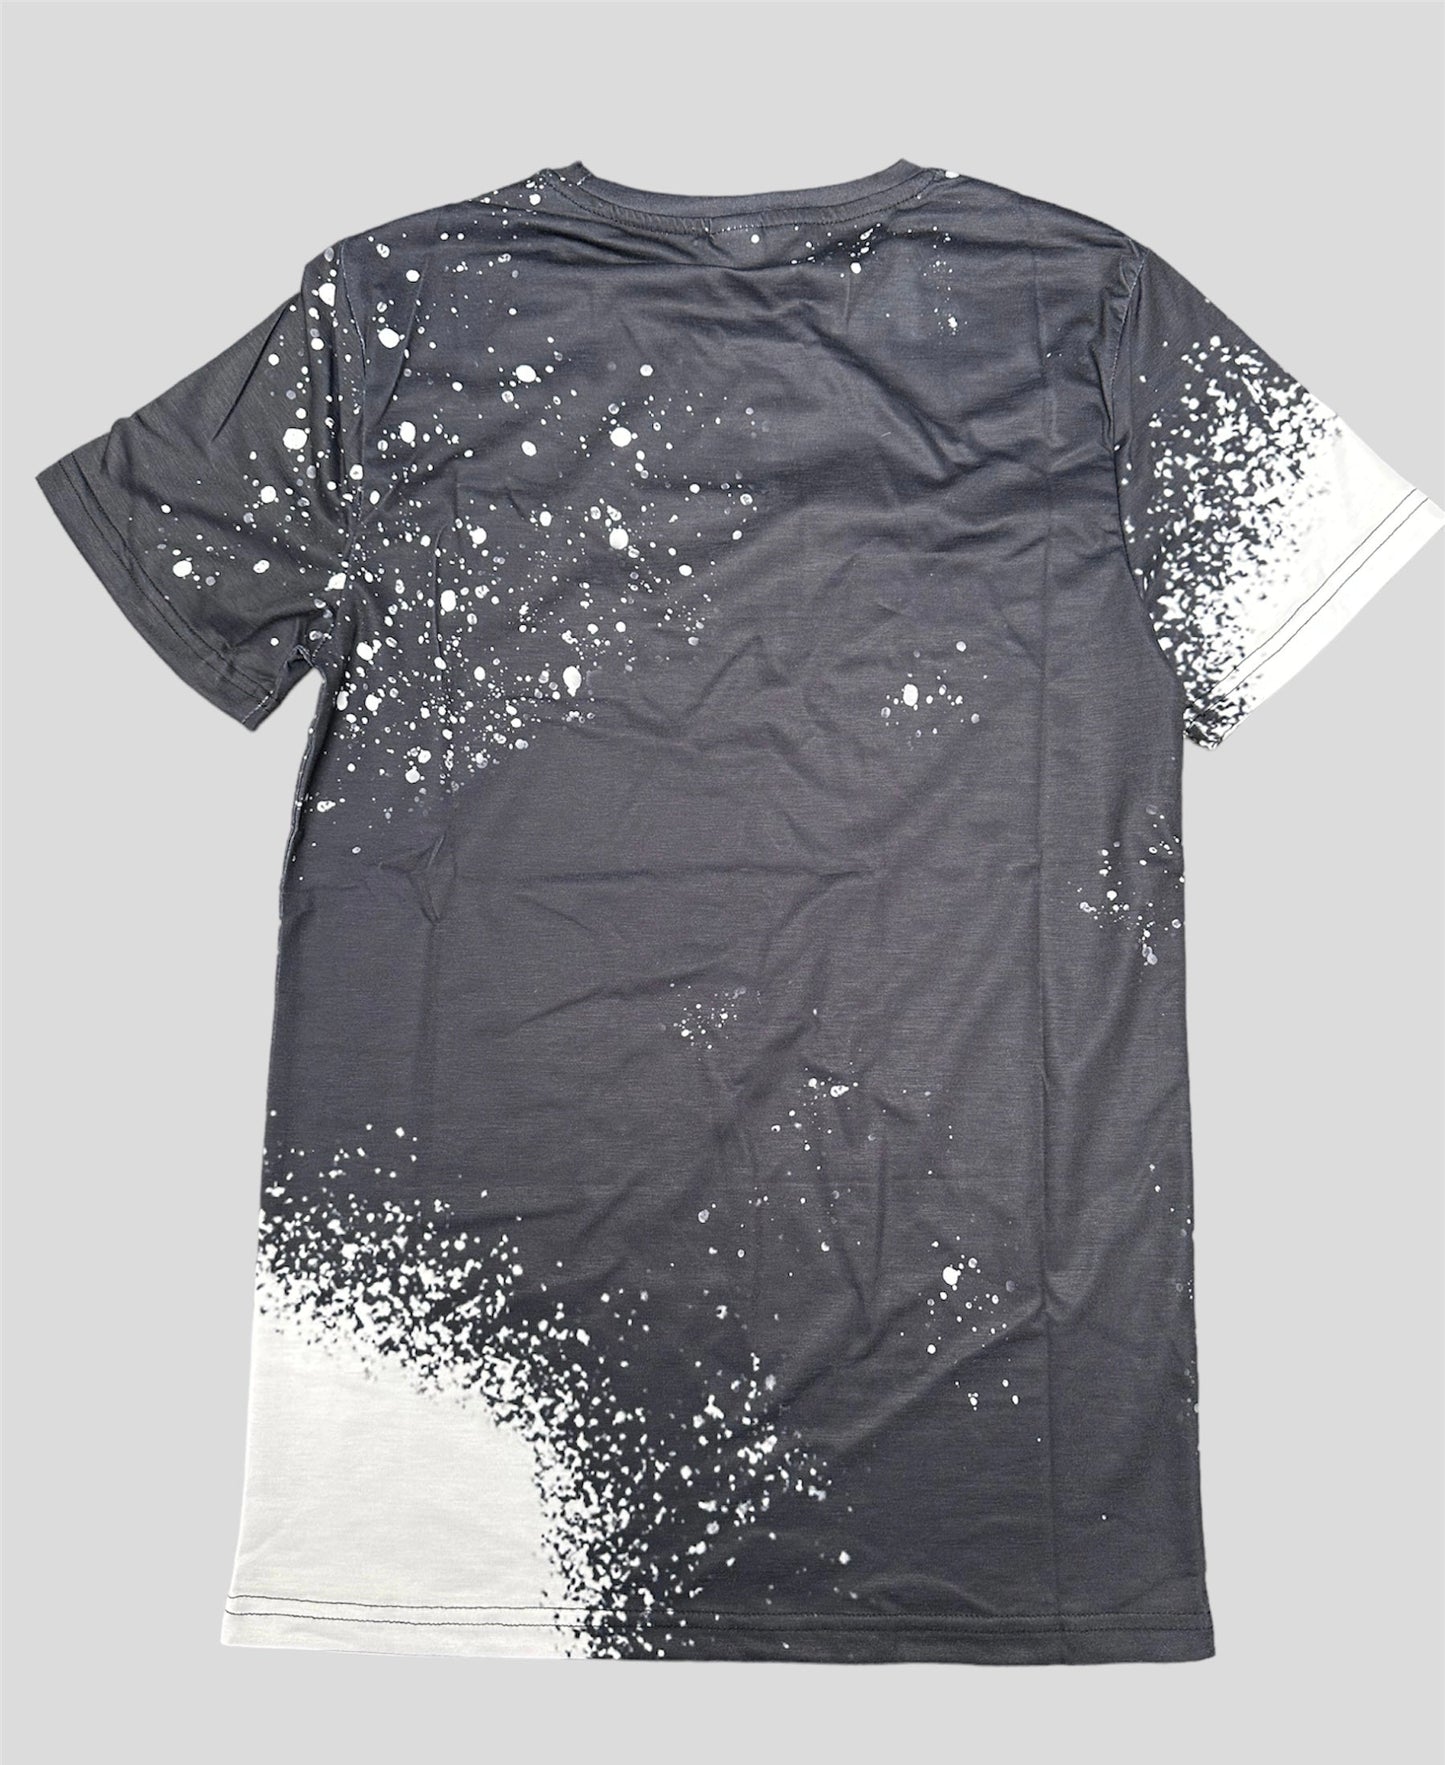 Blanks Spots Faux Bleached Kids Unisex Shirts